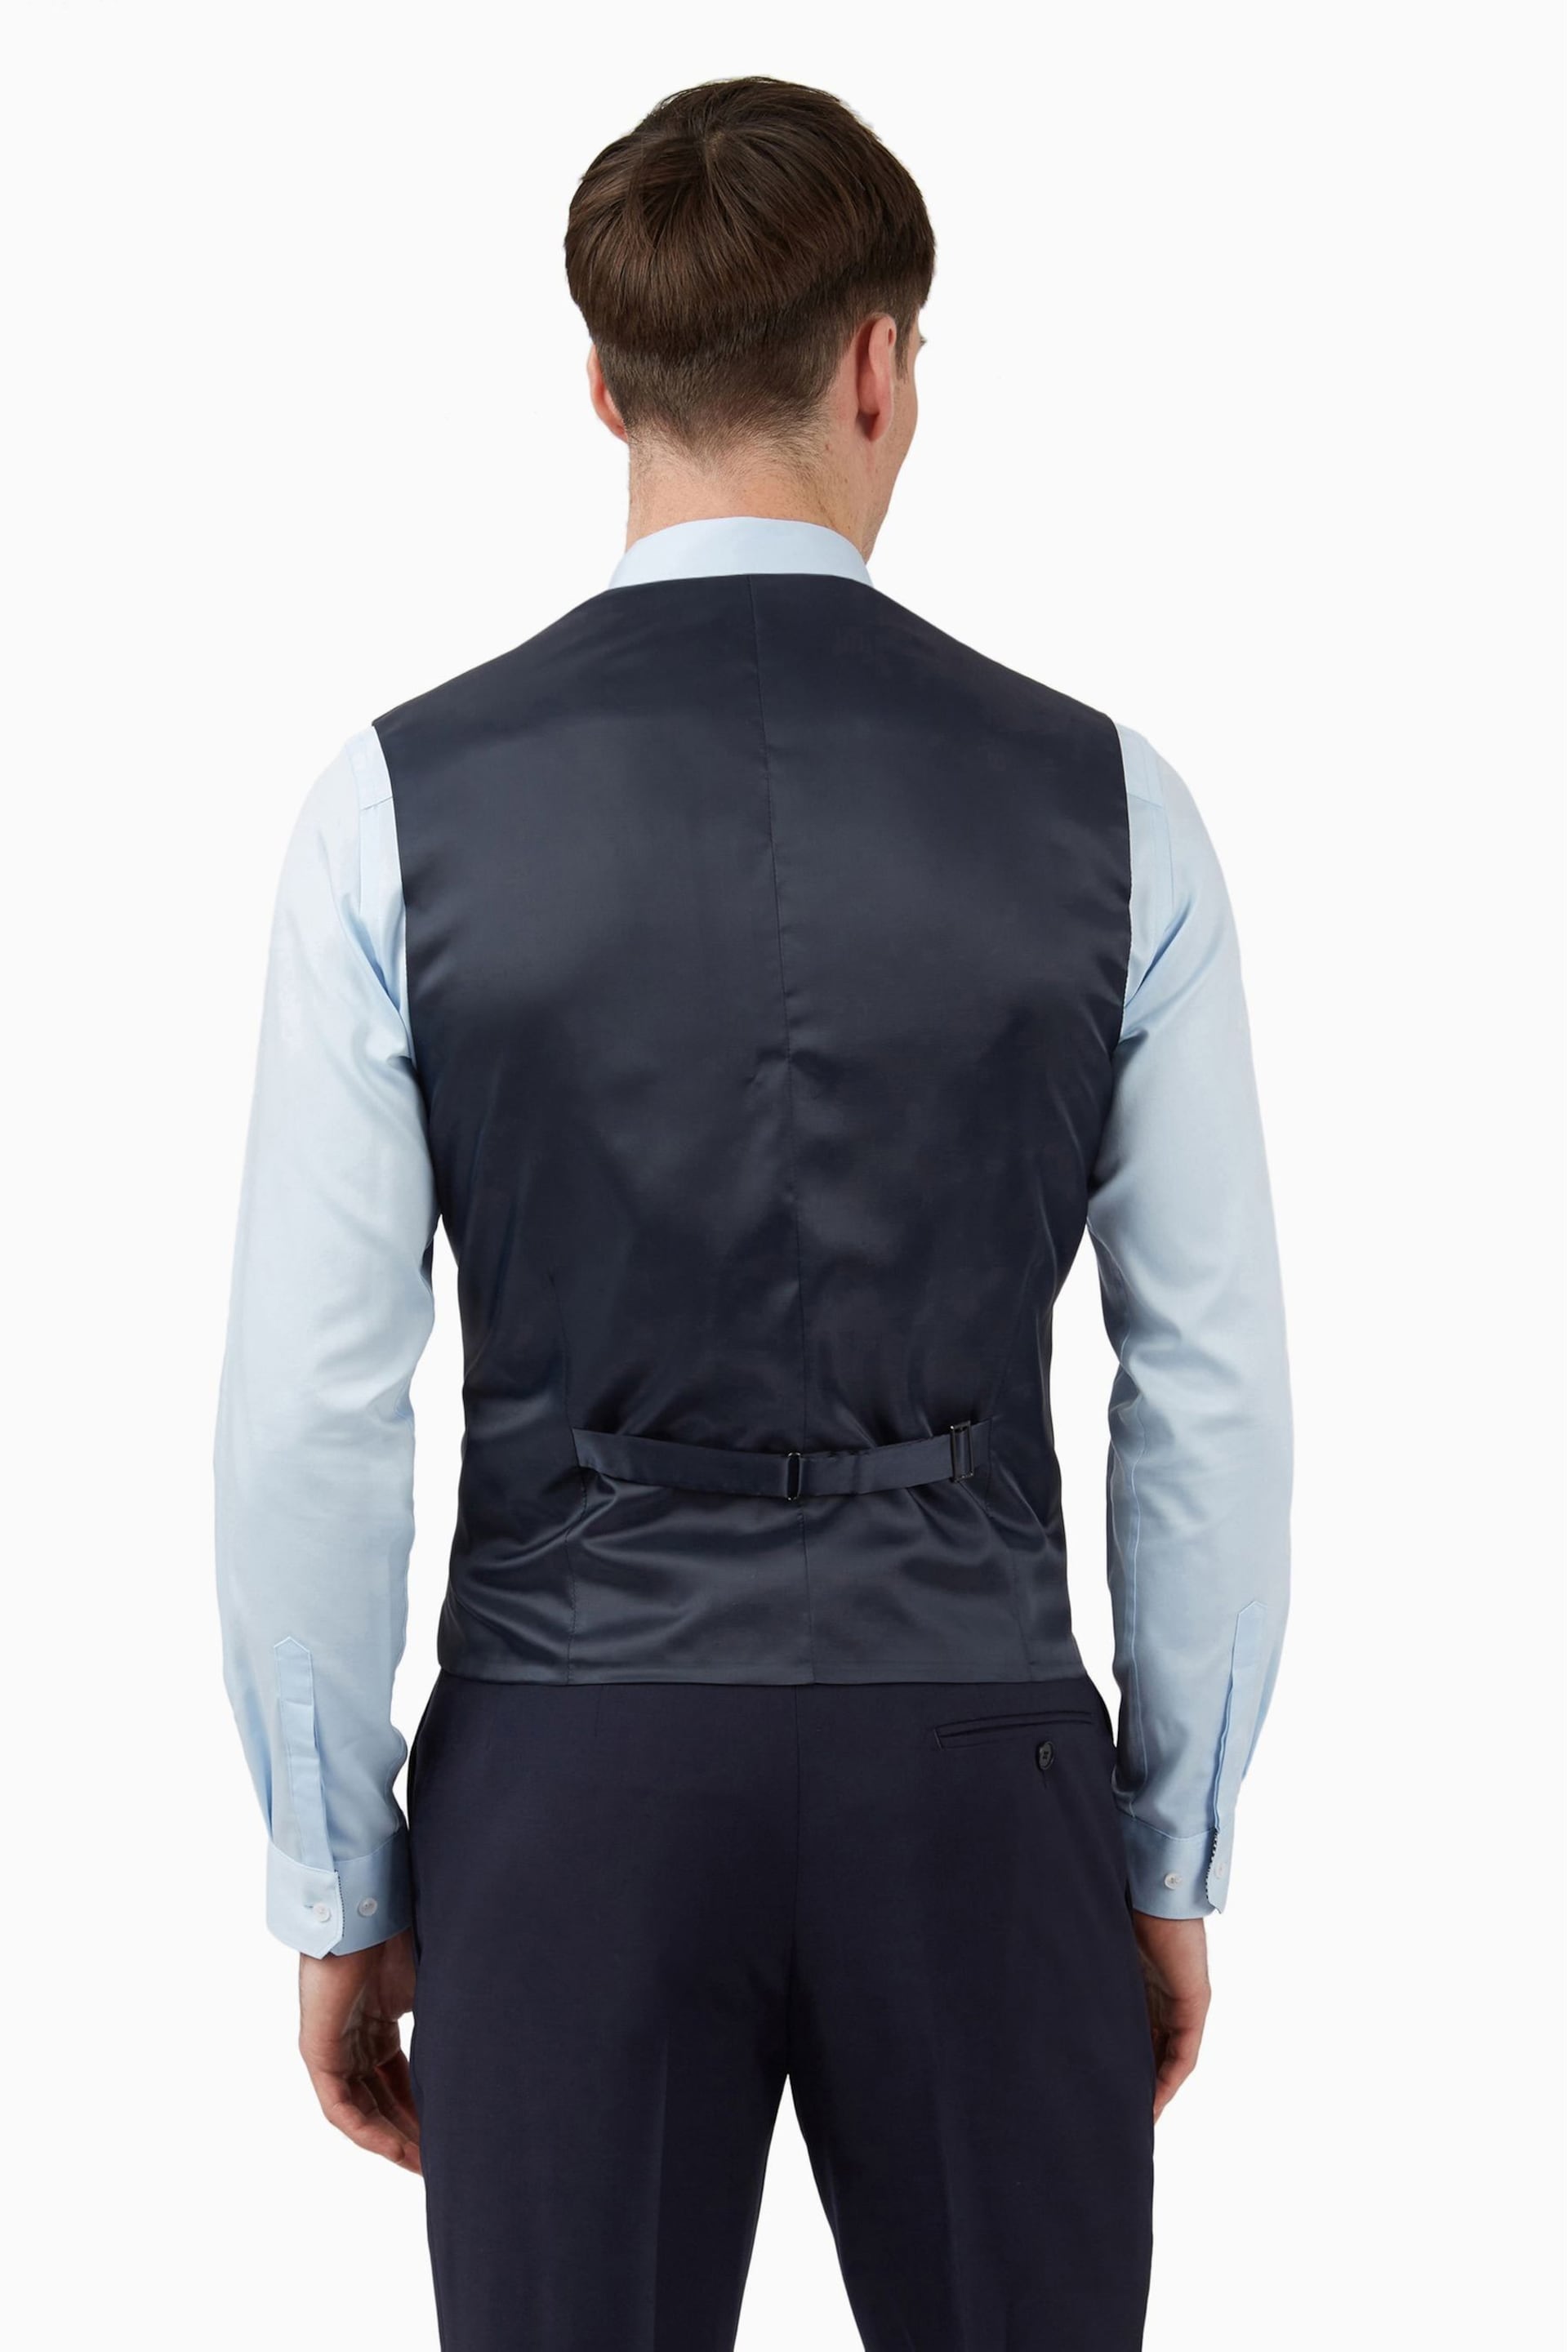 Ted Baker Navy Blue Premium Panama Suit Waistcoat - Image 4 of 4